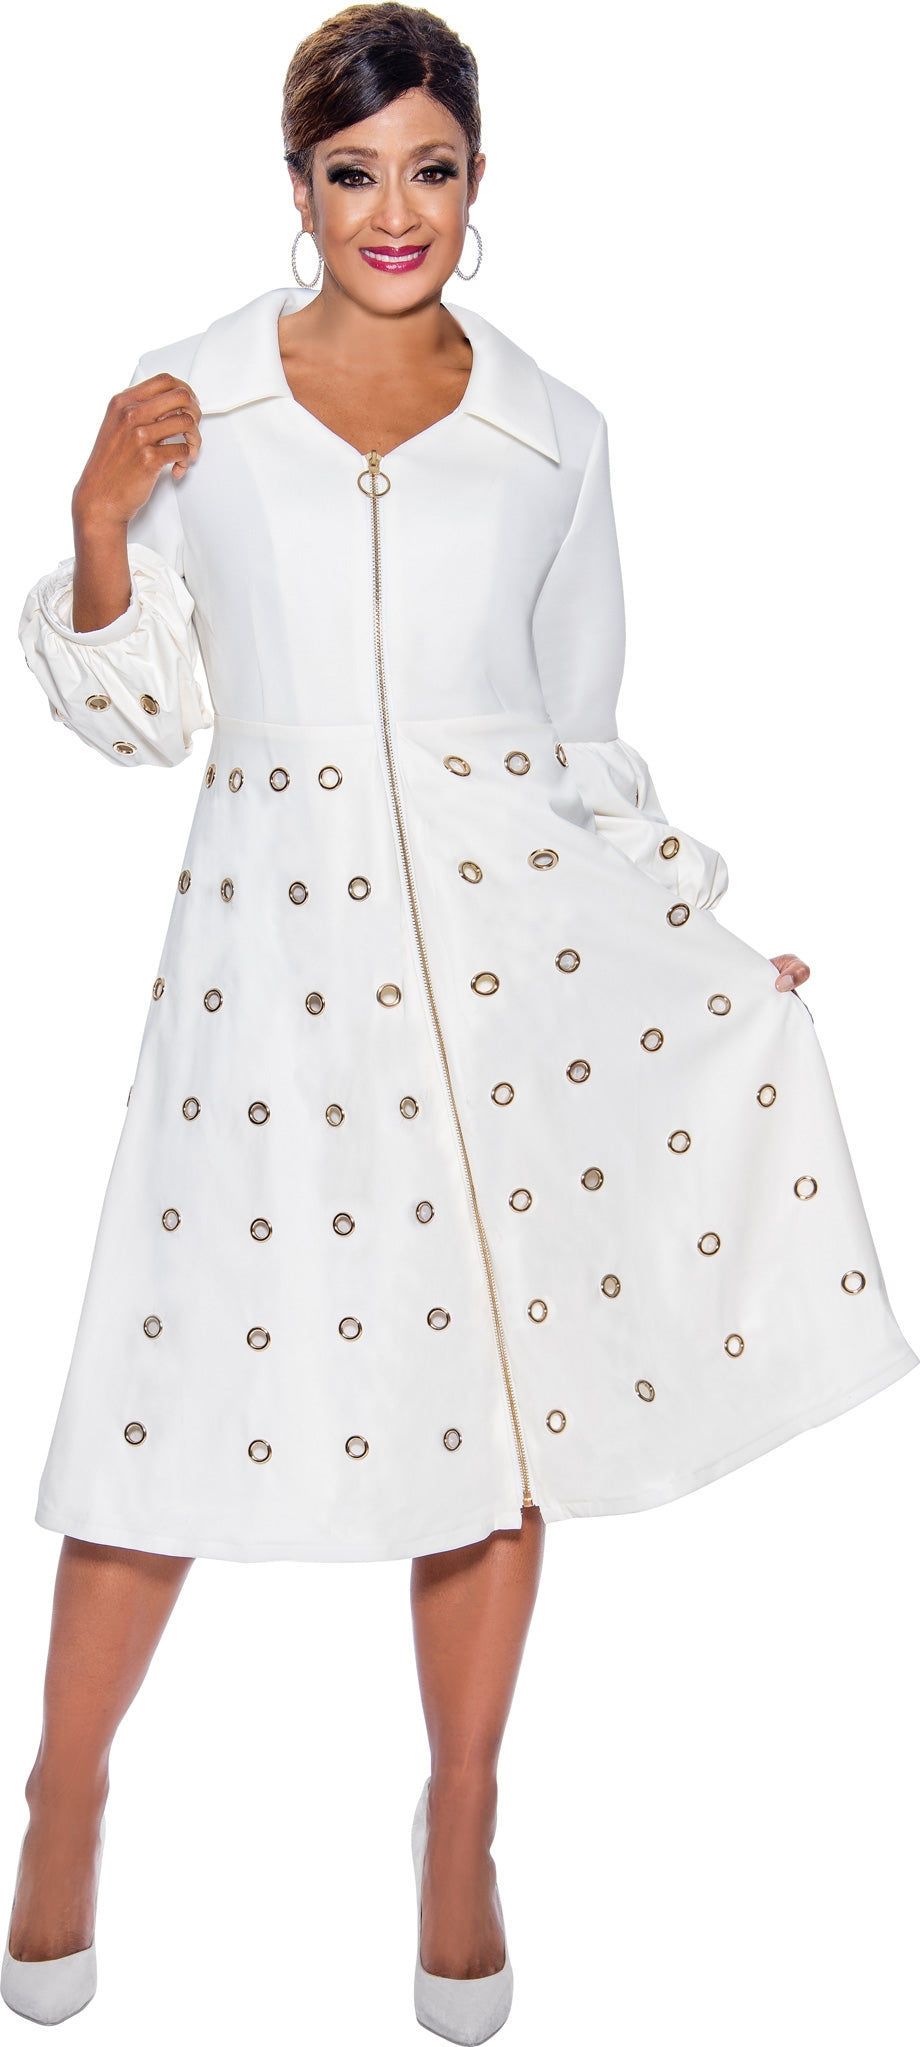 Dorinda Clark Cole Dress 4821C-Ivory - Church Suits For Less